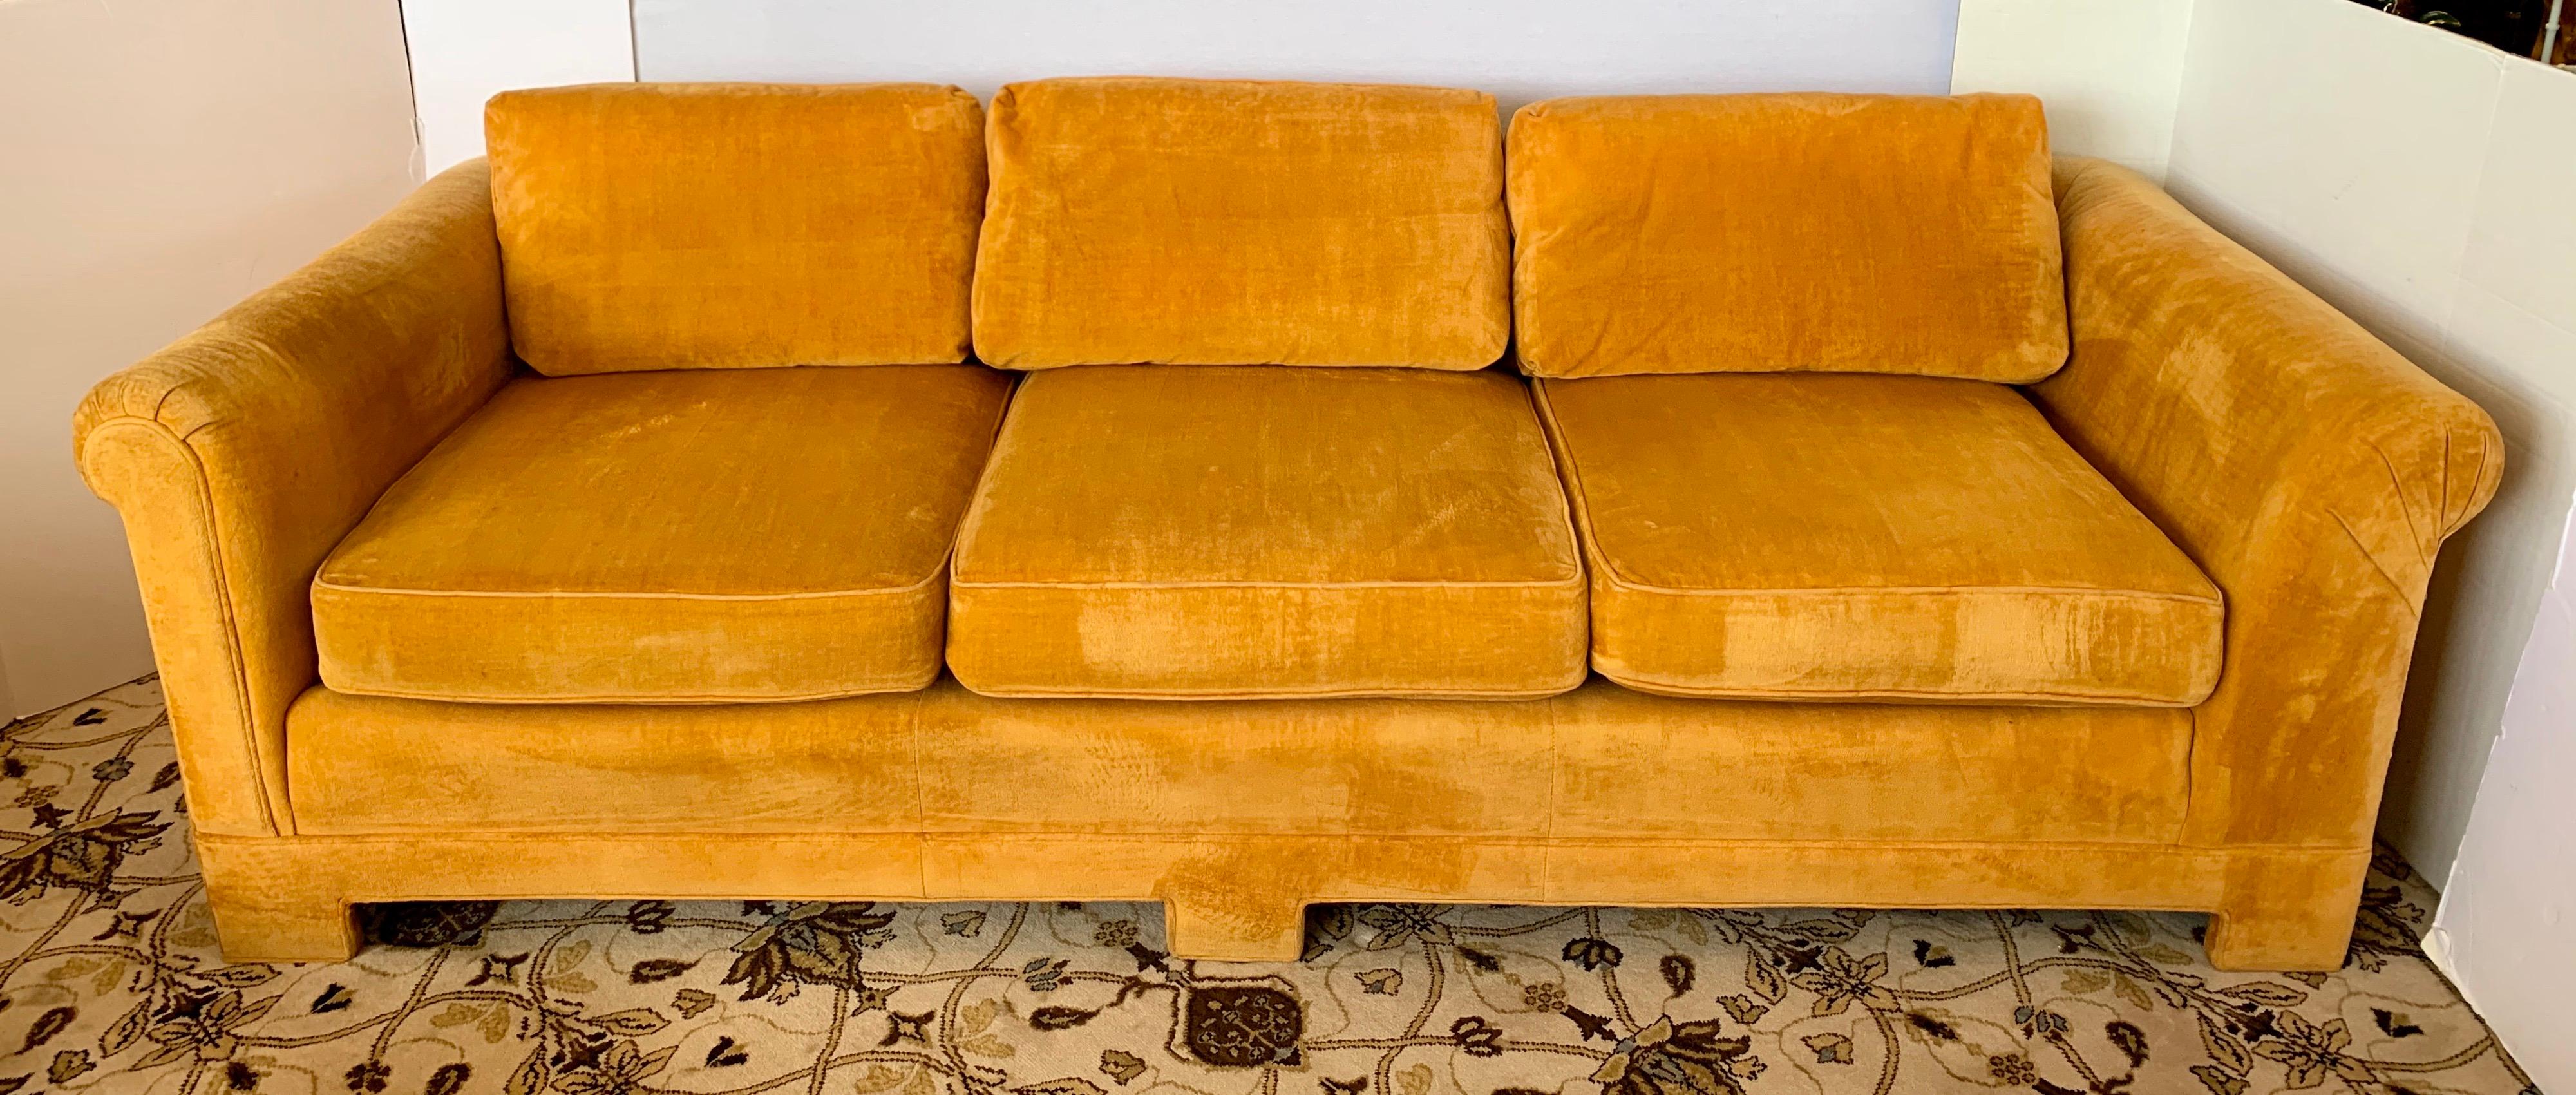 orange velvet couch vintage